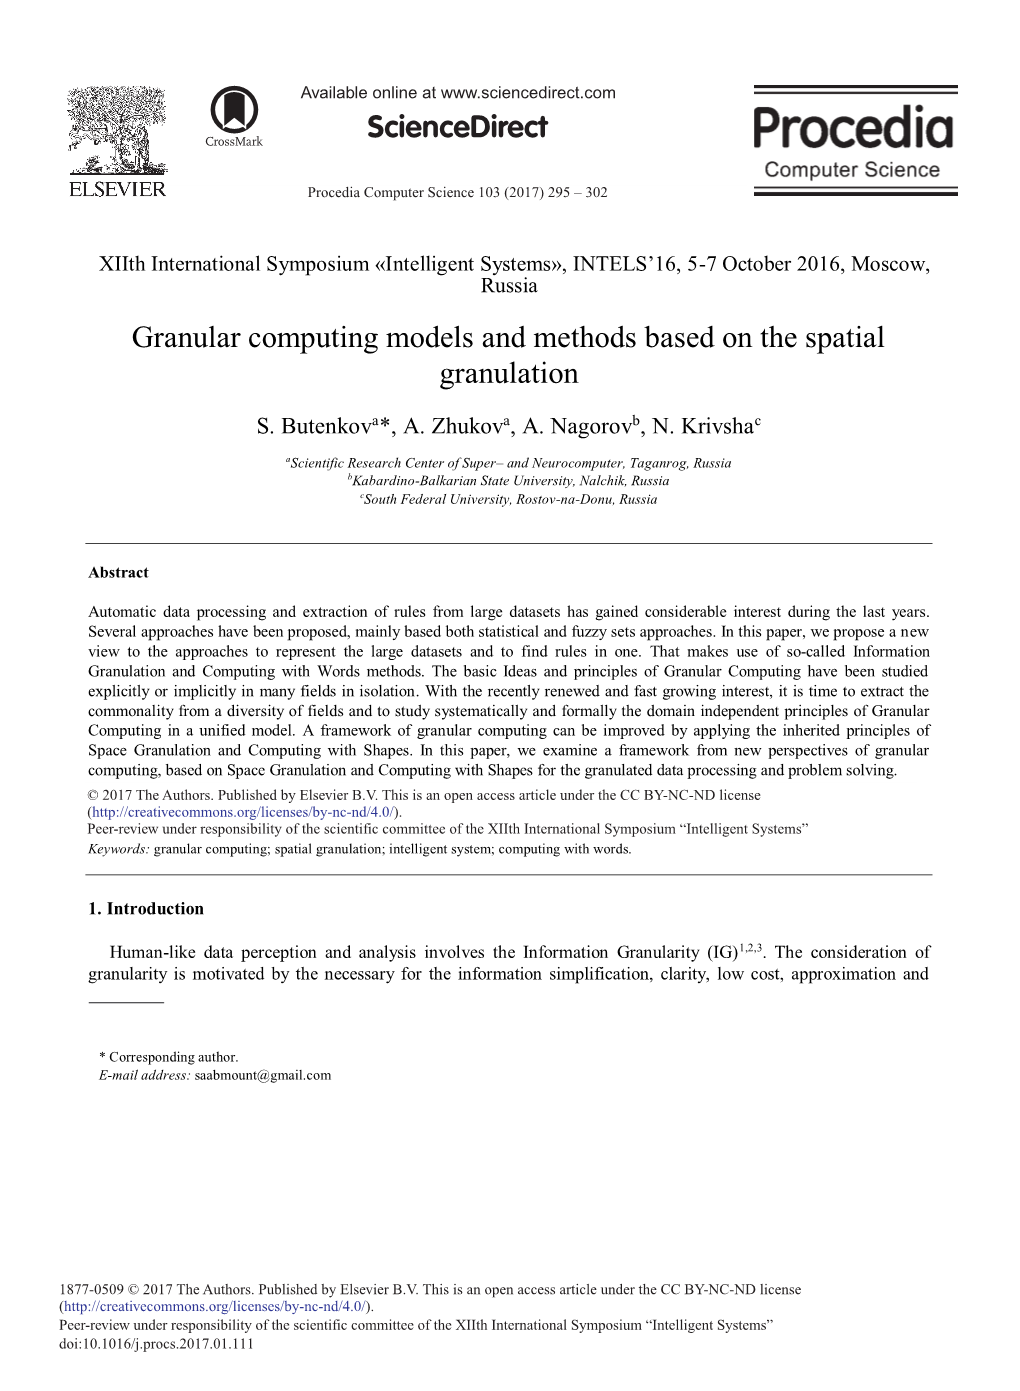 Granular Computing Models and Methods Based on the Spatial Granulation